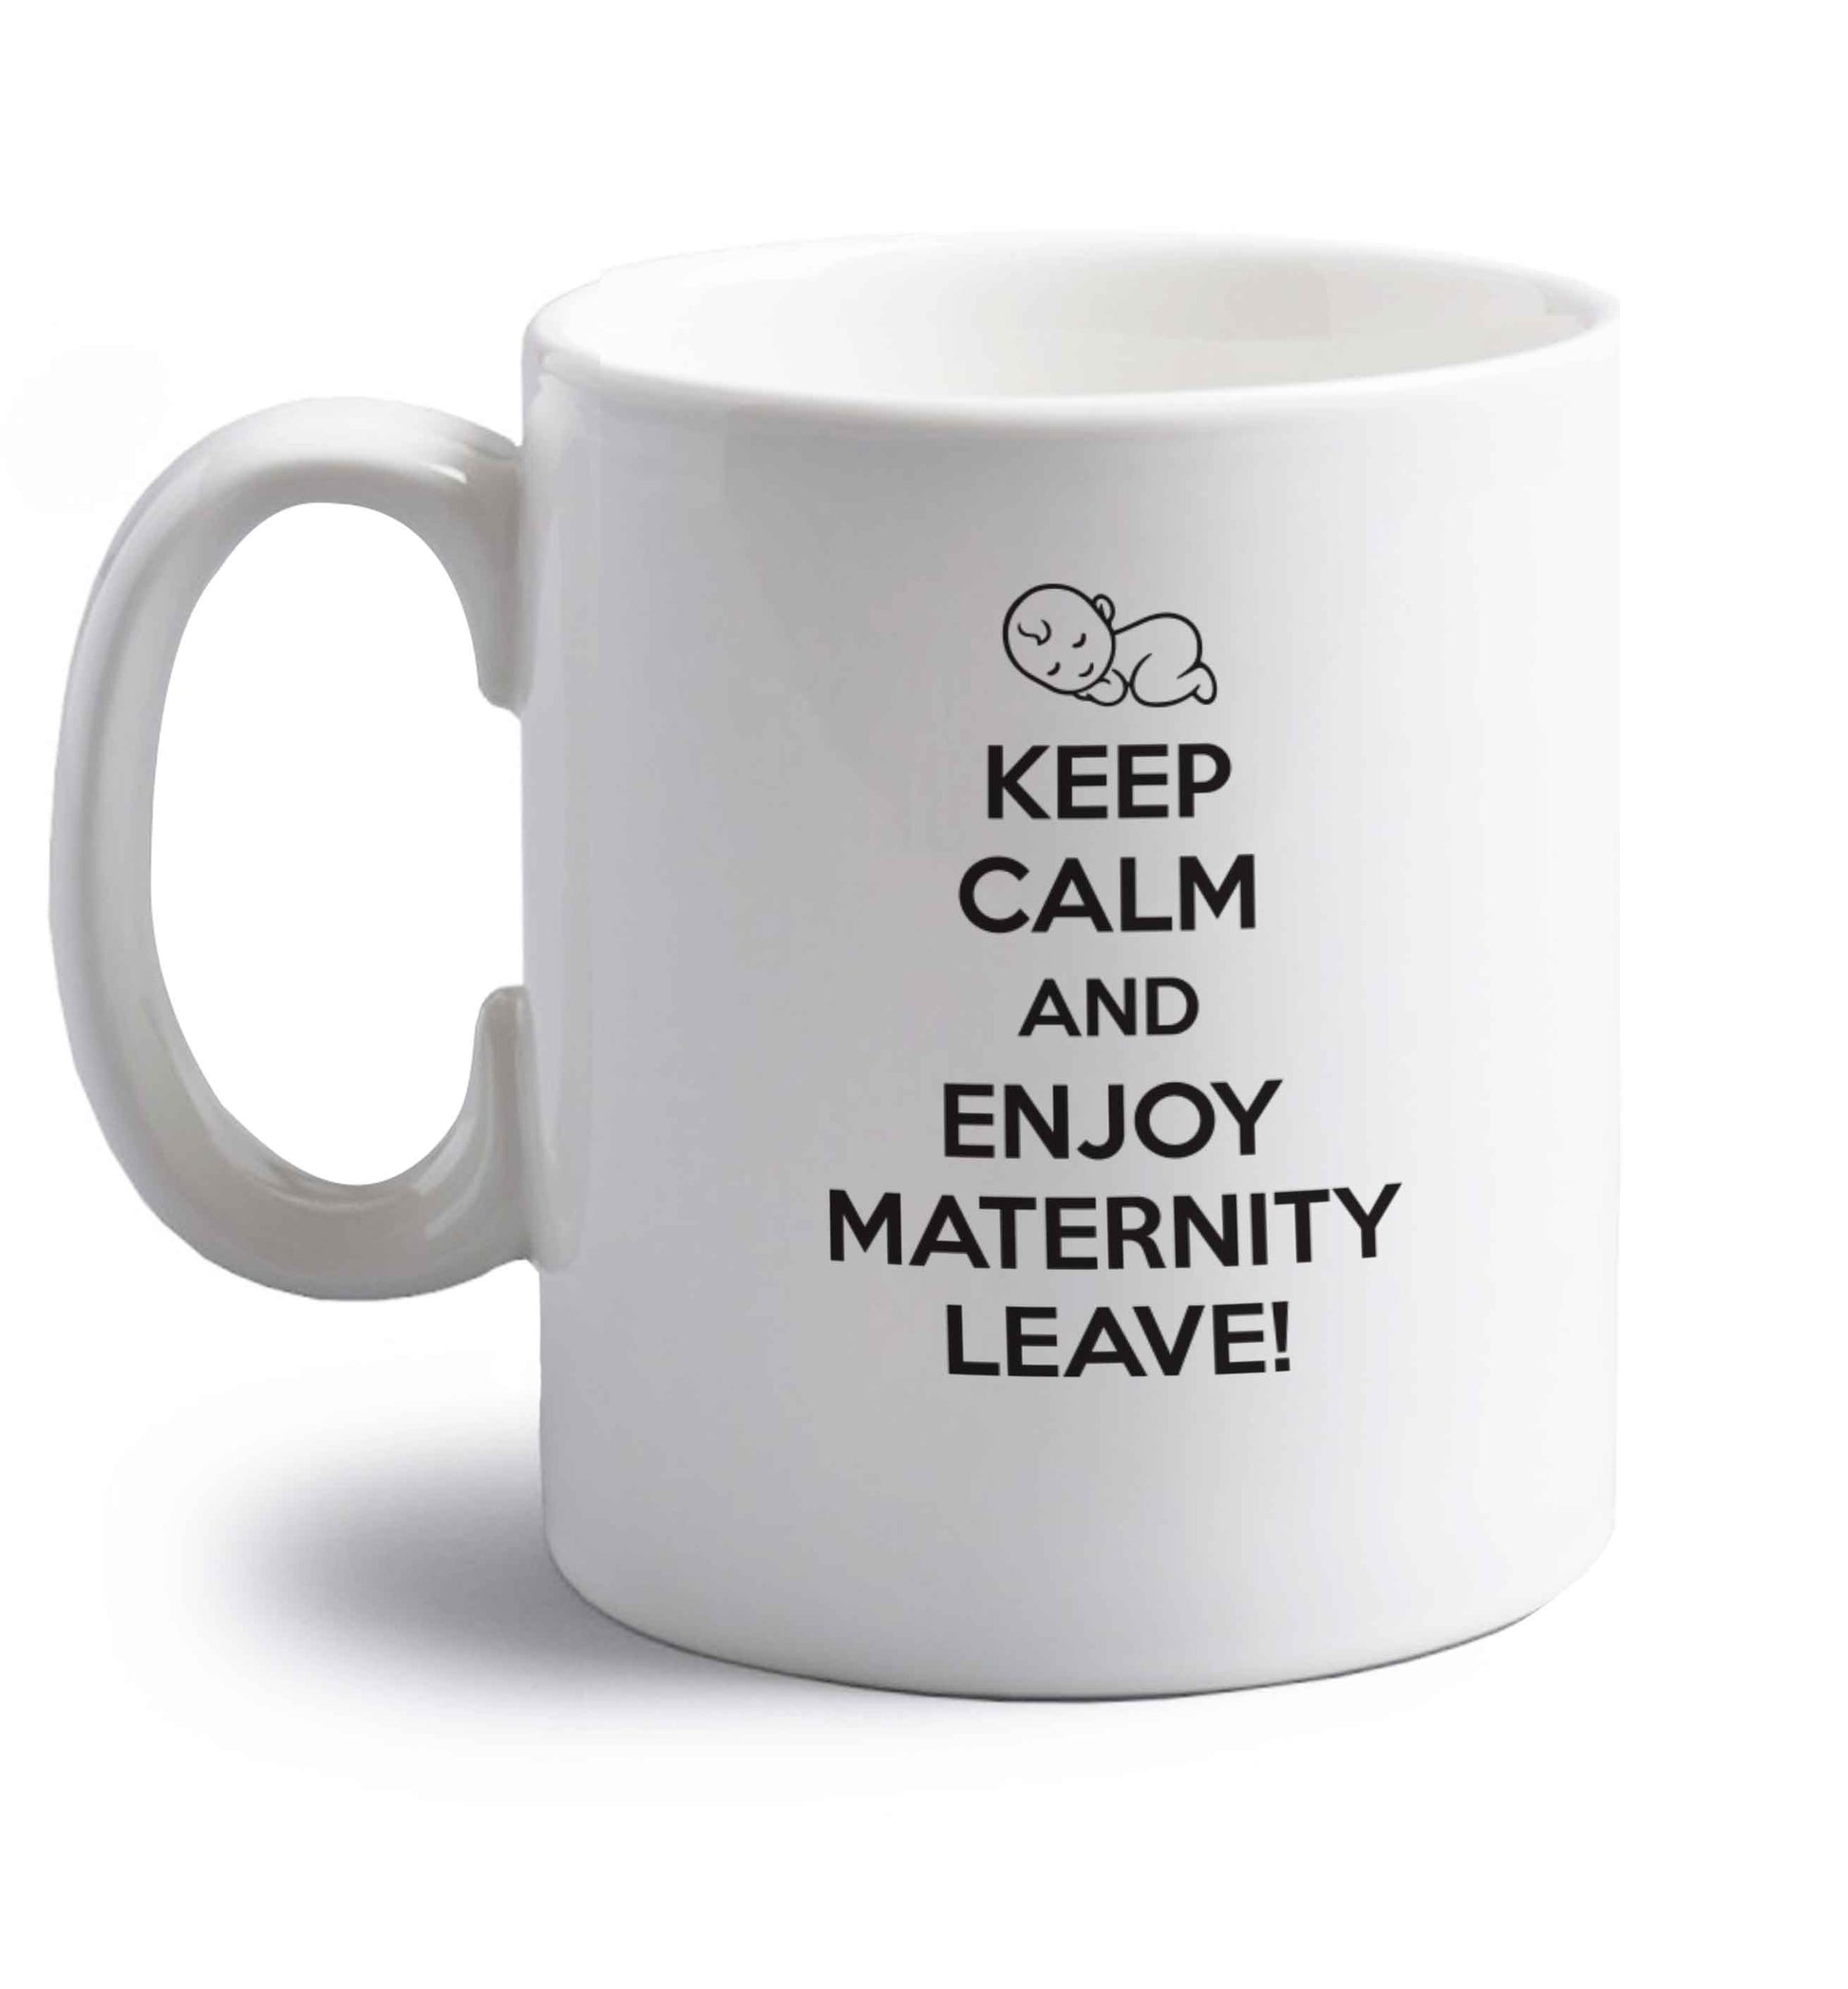 Keep calm and enjoy maternity leave right handed white ceramic mug 